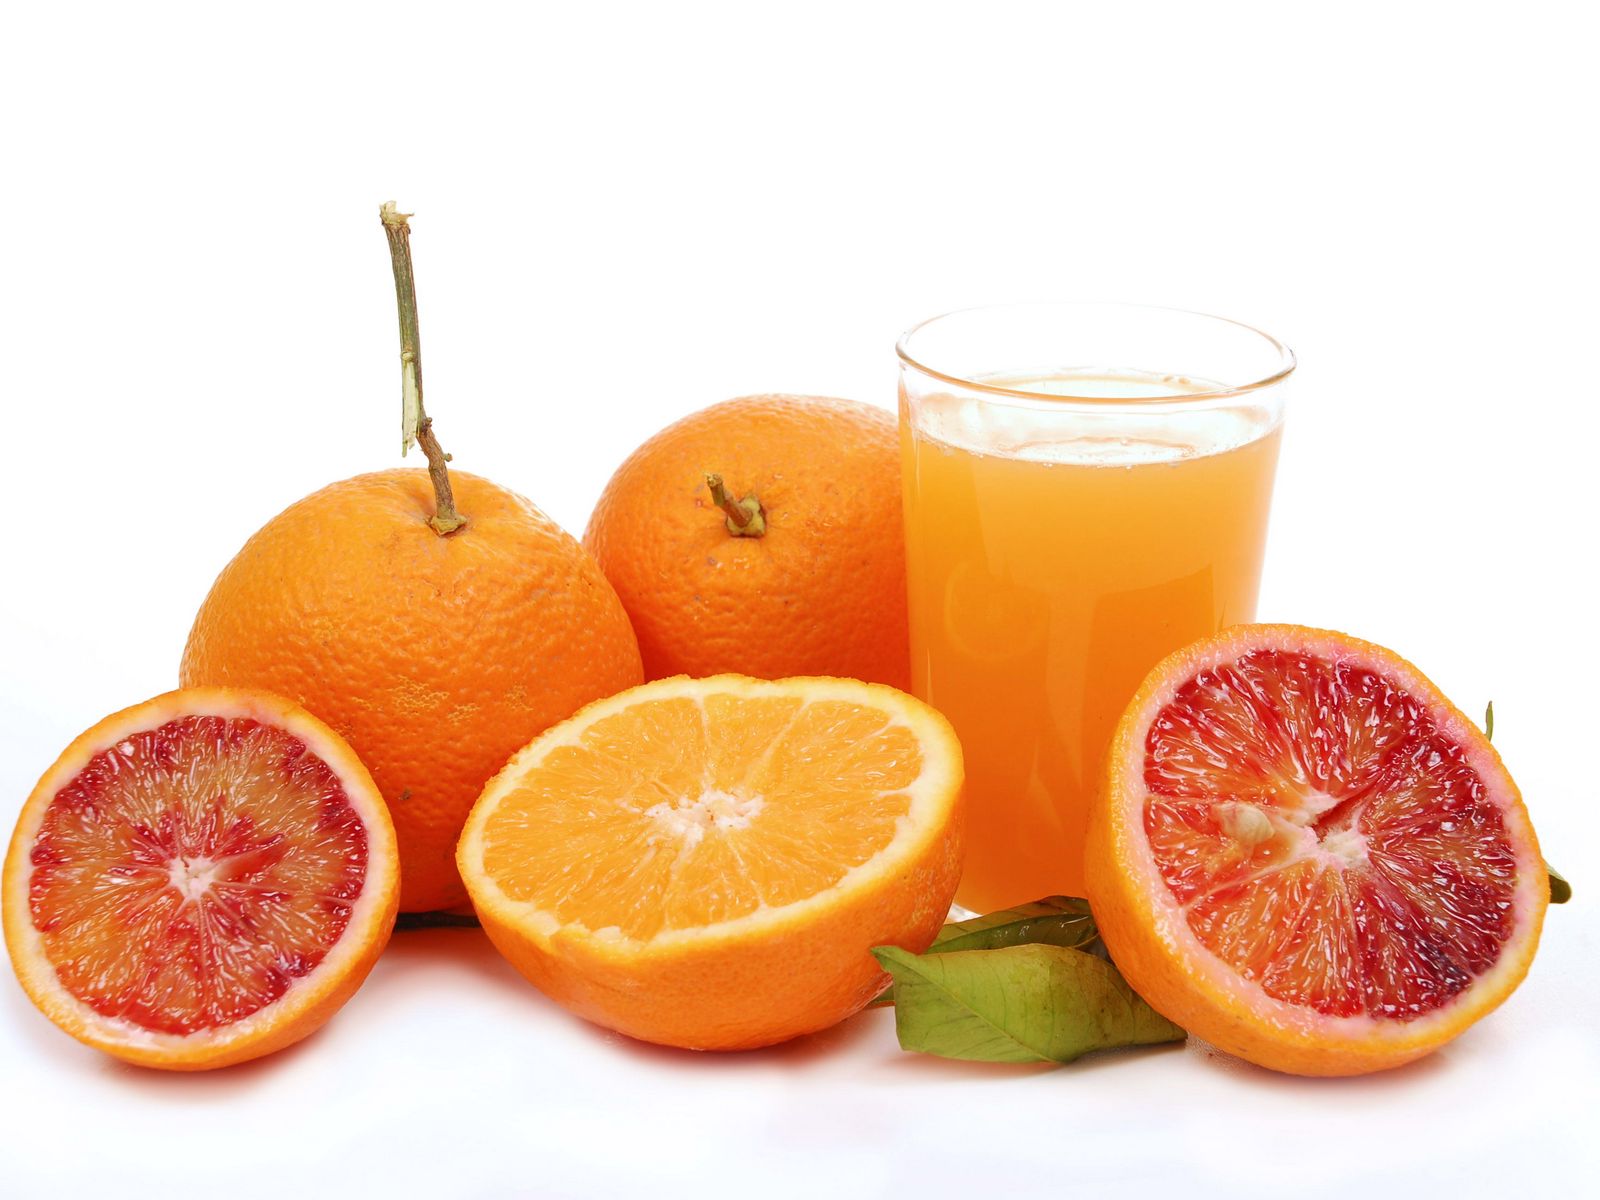 Download wallpaper 1600x1200 grapefruit, orange, juice, glass, white  background standard 4:3 hd background